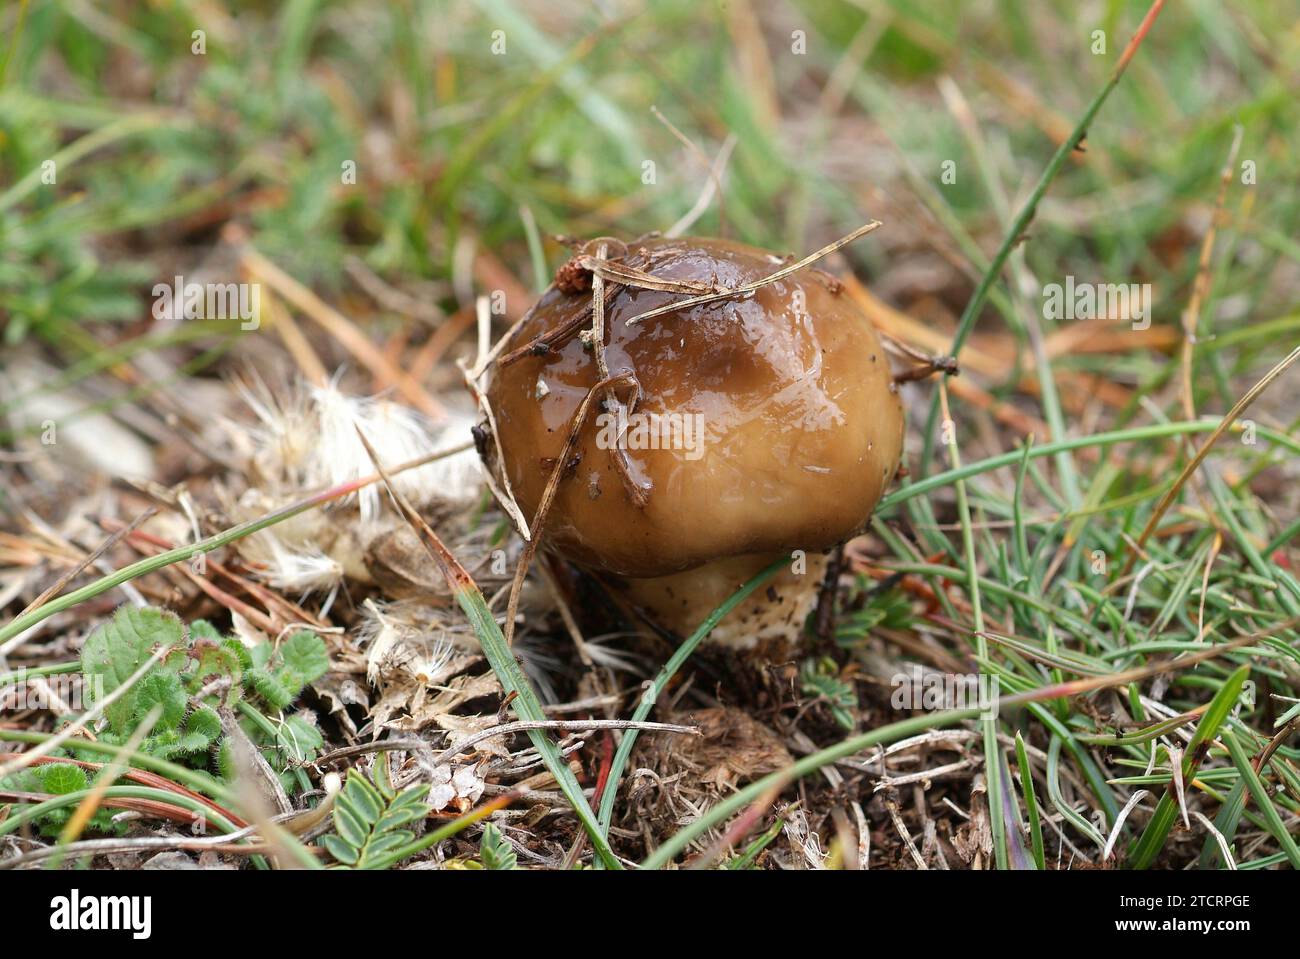 Hygrophorus latitabundus or Hygrophorus limacinus is an edible mushroom that grows on conifer forests. This photo was taken in La Lalacuna, Barcelona Stock Photo